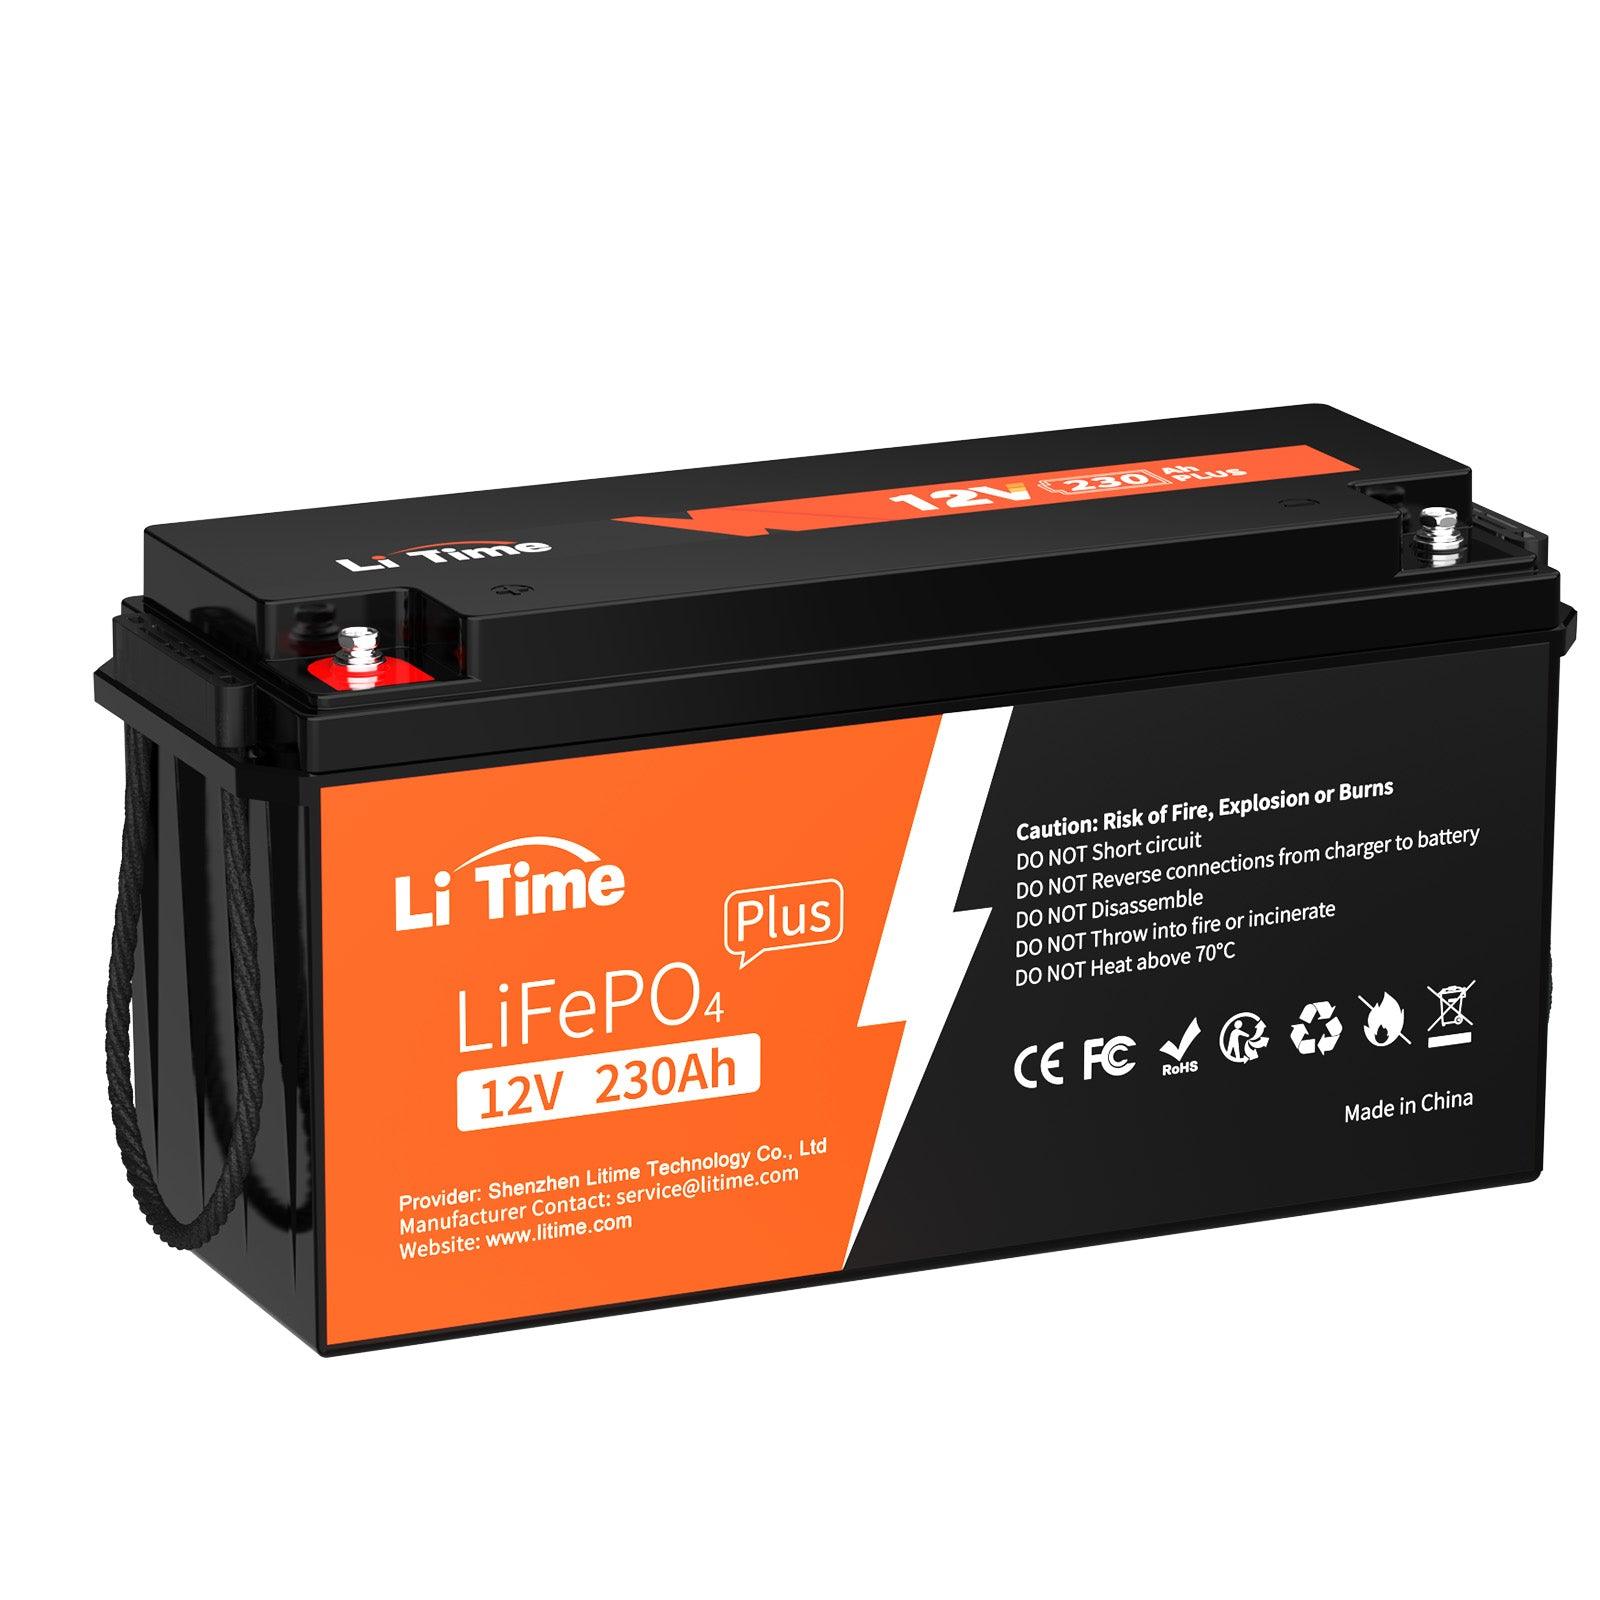 litime12v 230ah plus low temp protection lithium battery